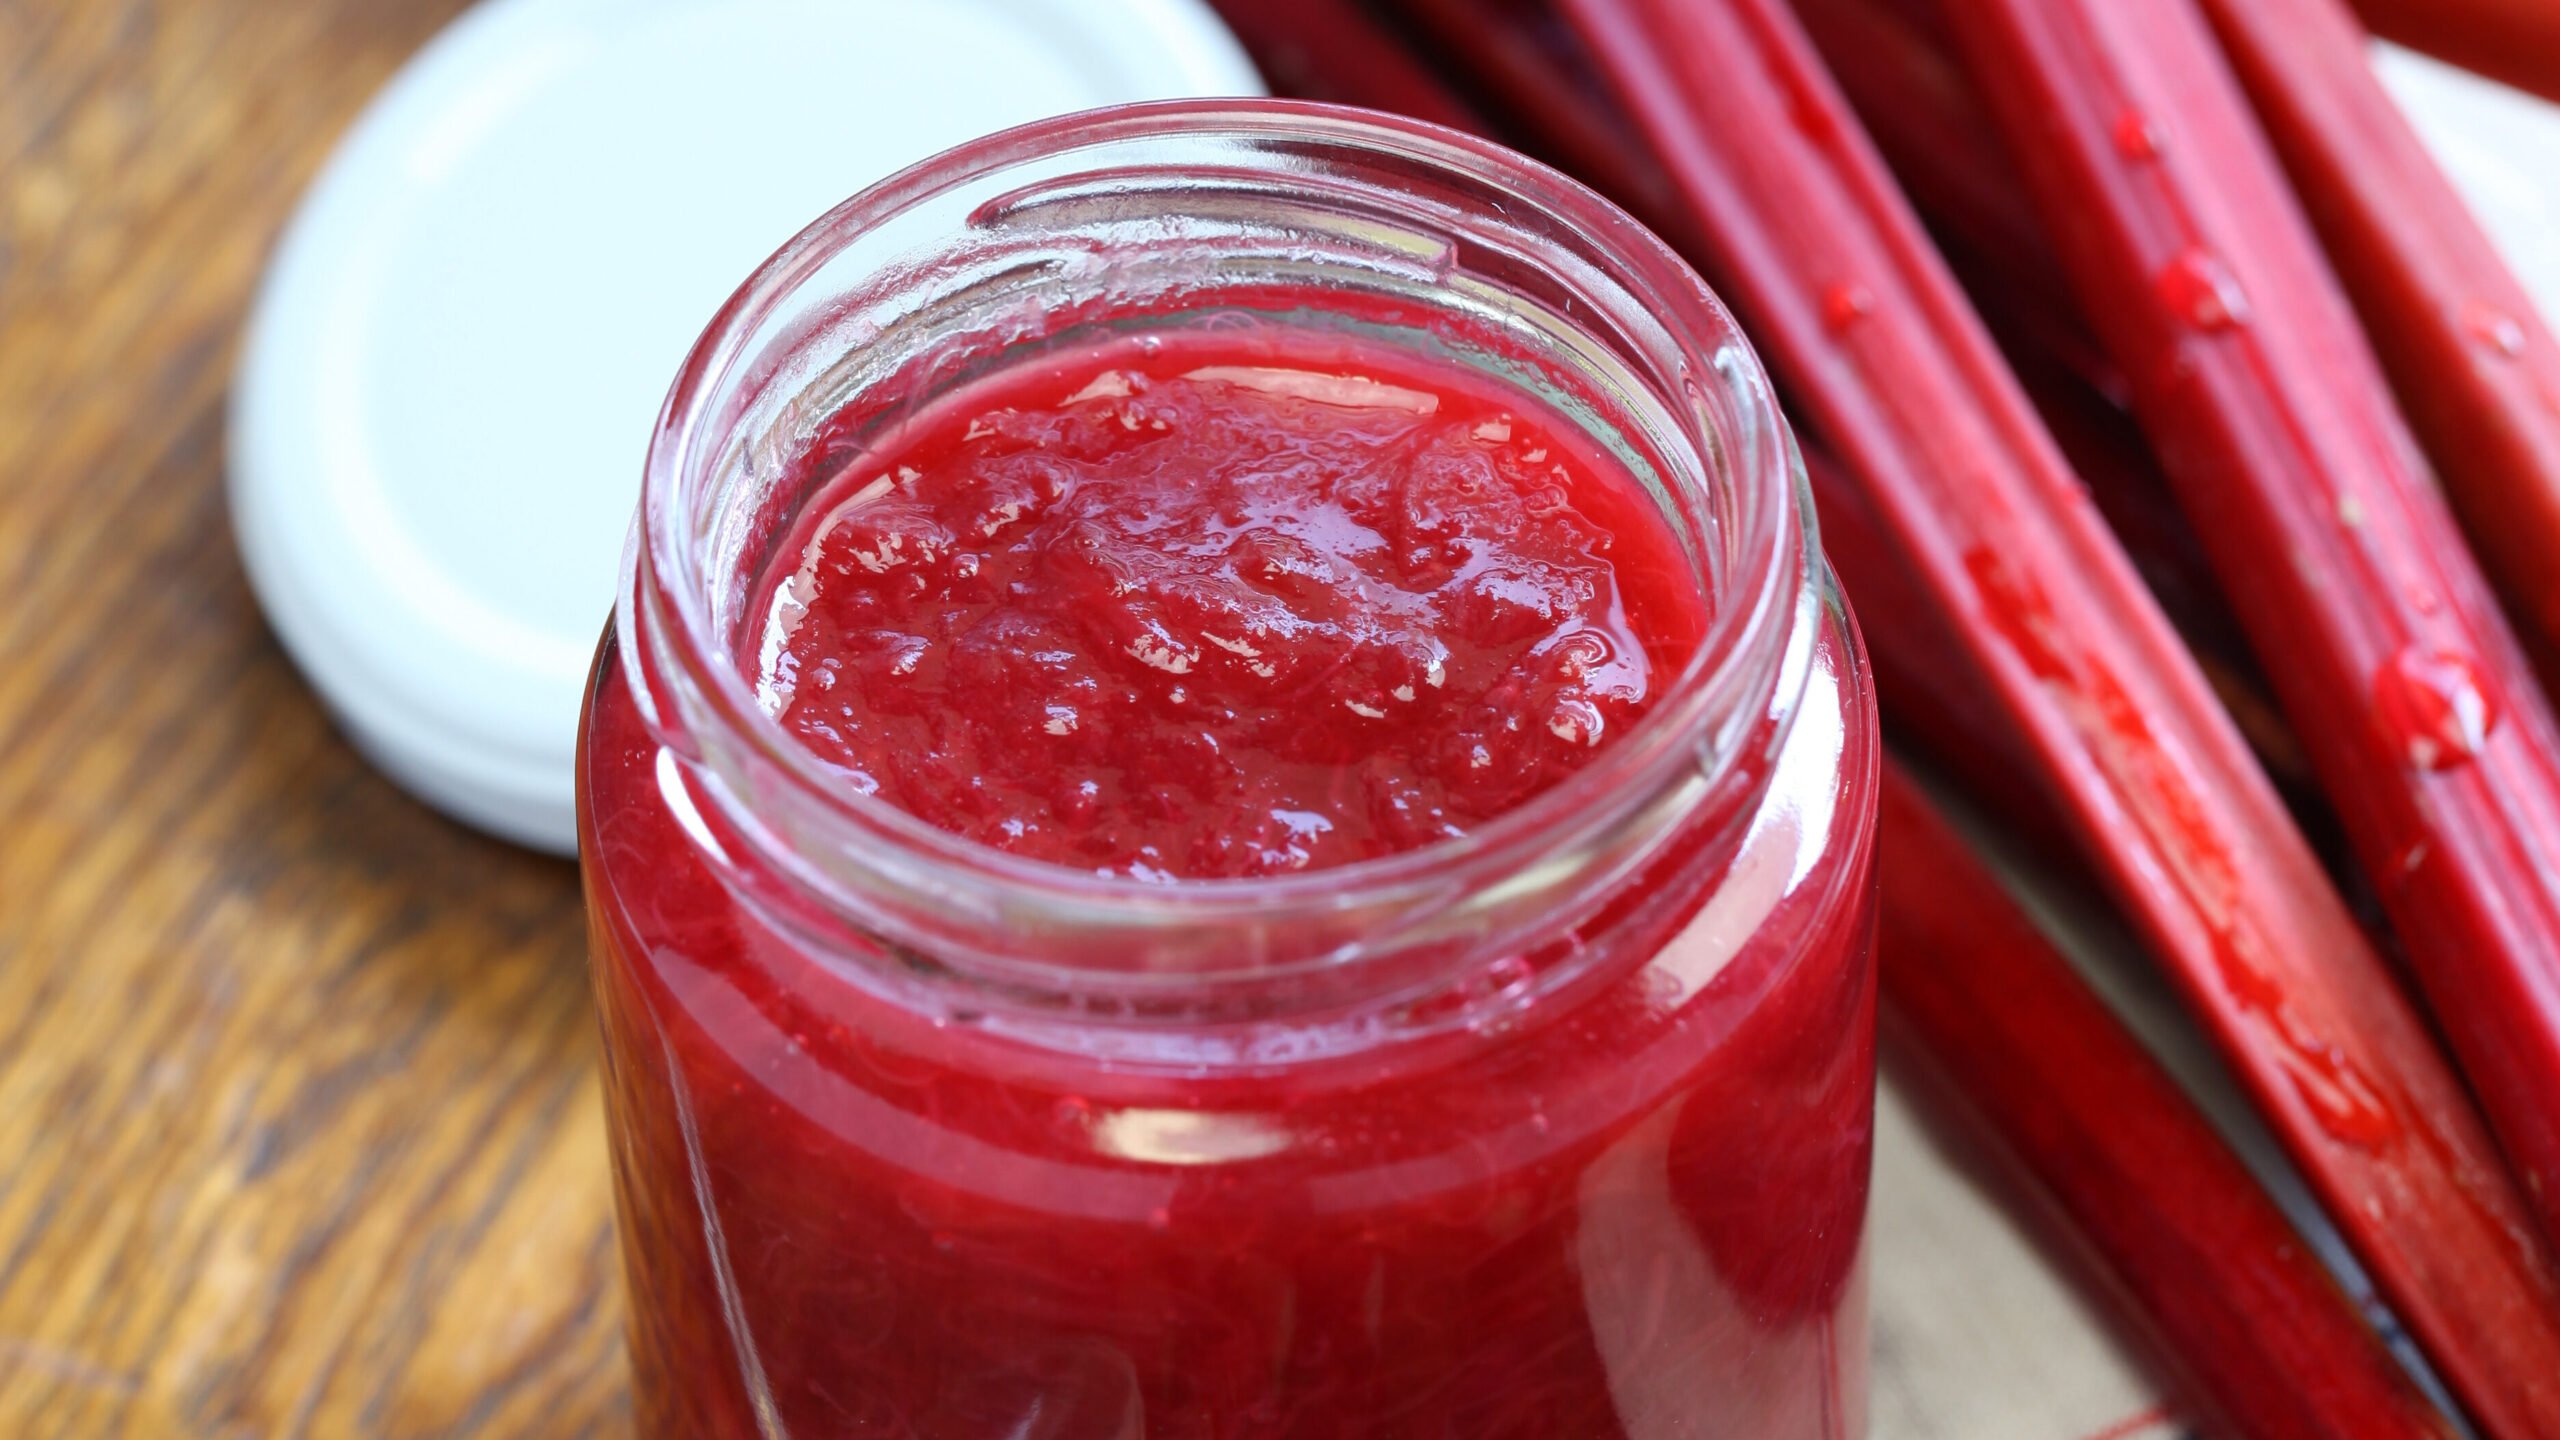 Homemade rhubarb compote in jar